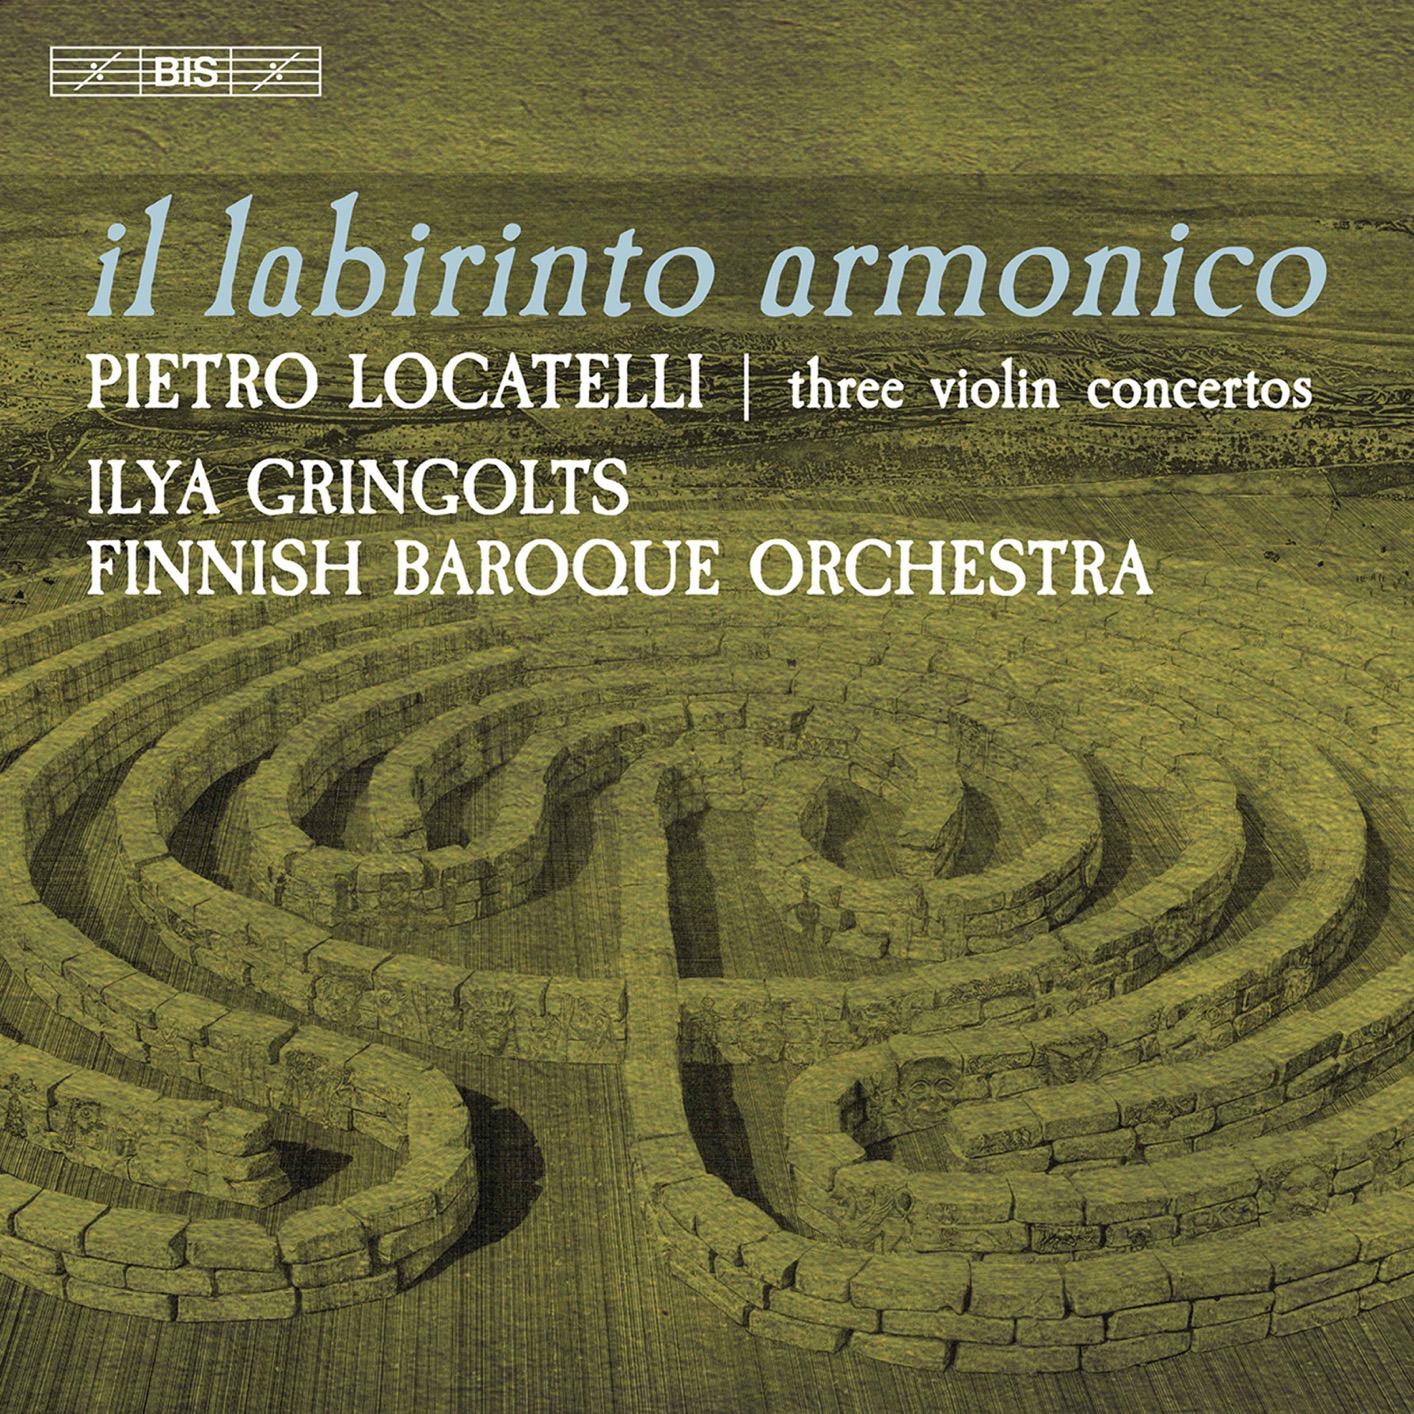 Ilya Gringolts & Finnish Baroque Orchestra - Il labirinto armonico (2021) [FLAC 24bit/96kHz]